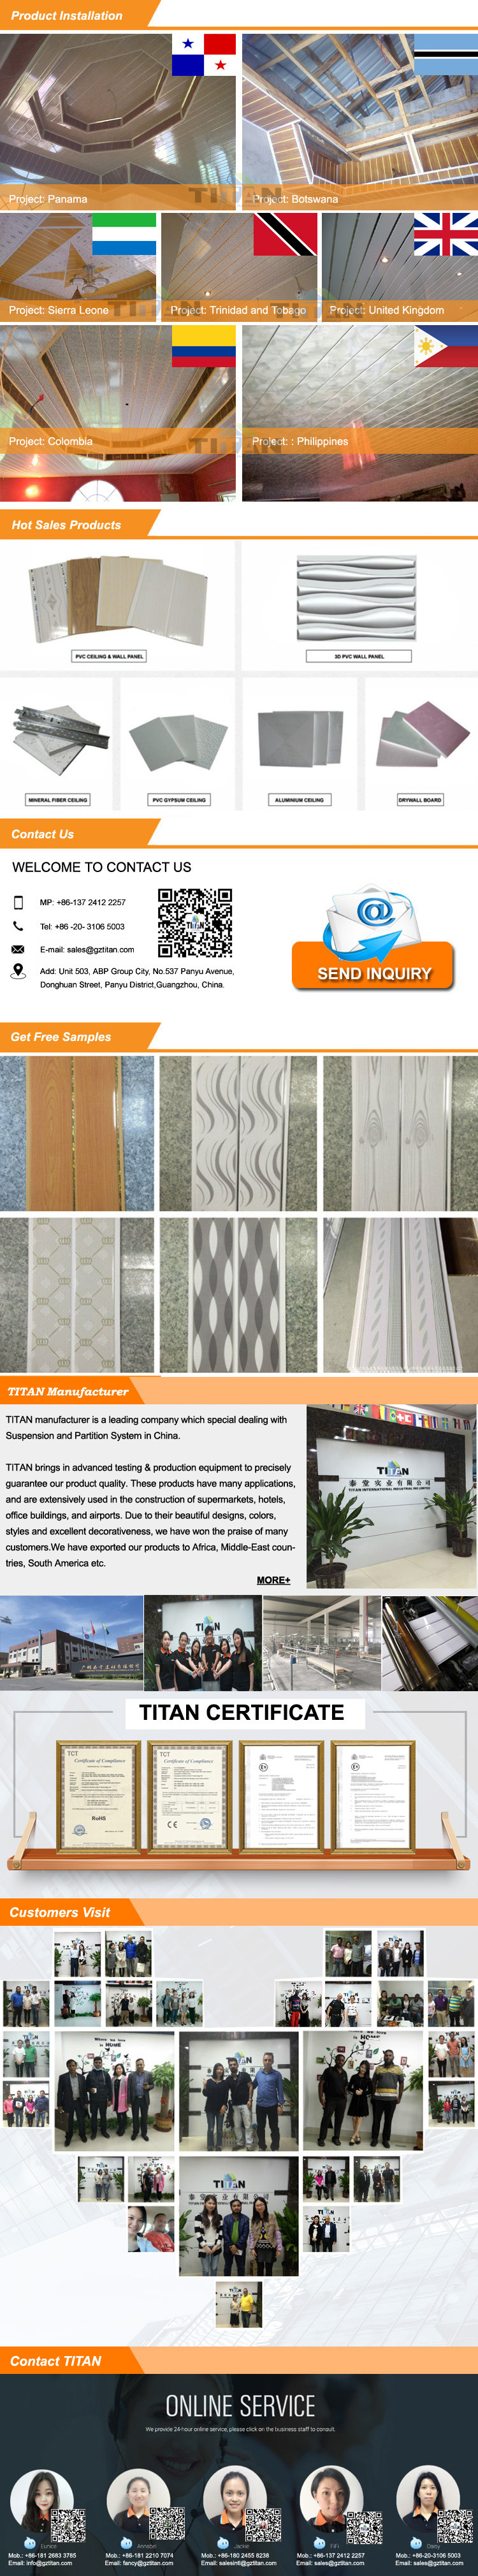 Texture Interior Decorative PVC Ceiling Wall Panels